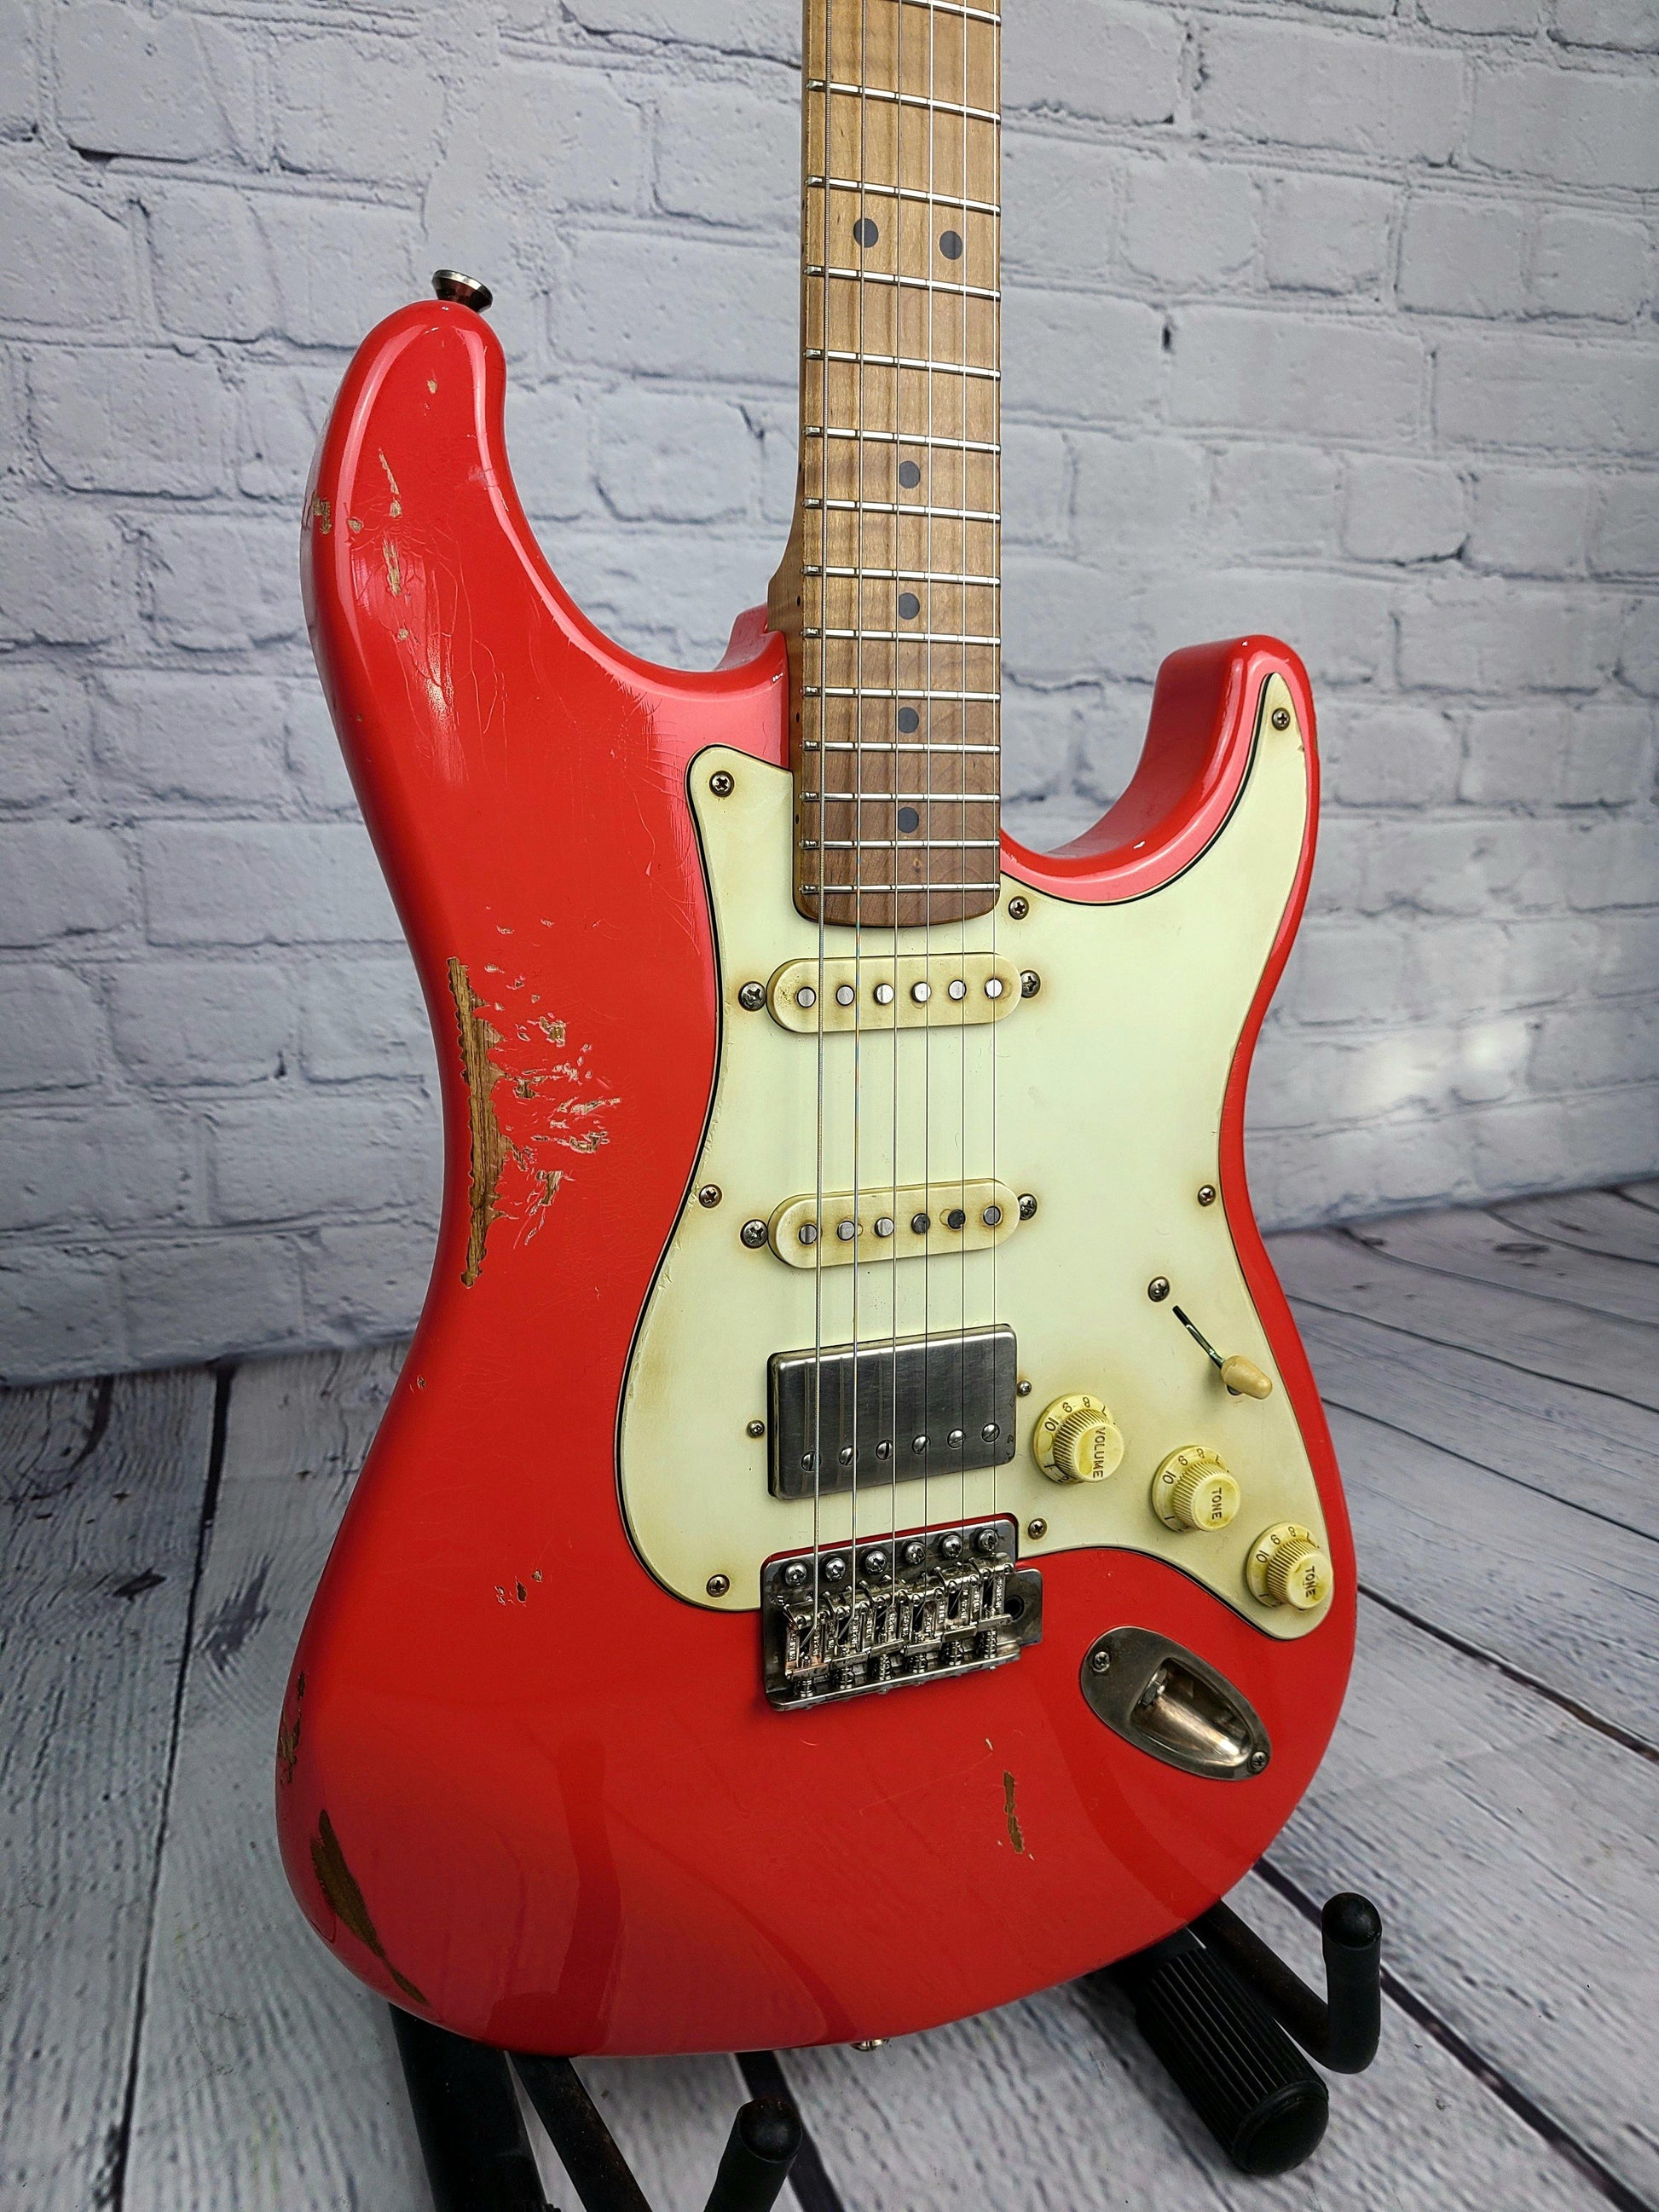 LsL Instruments Saticoy HSS NAMM 2021 Limited Roasted Run Fiesta Red "Tamali" - Guitar Brando